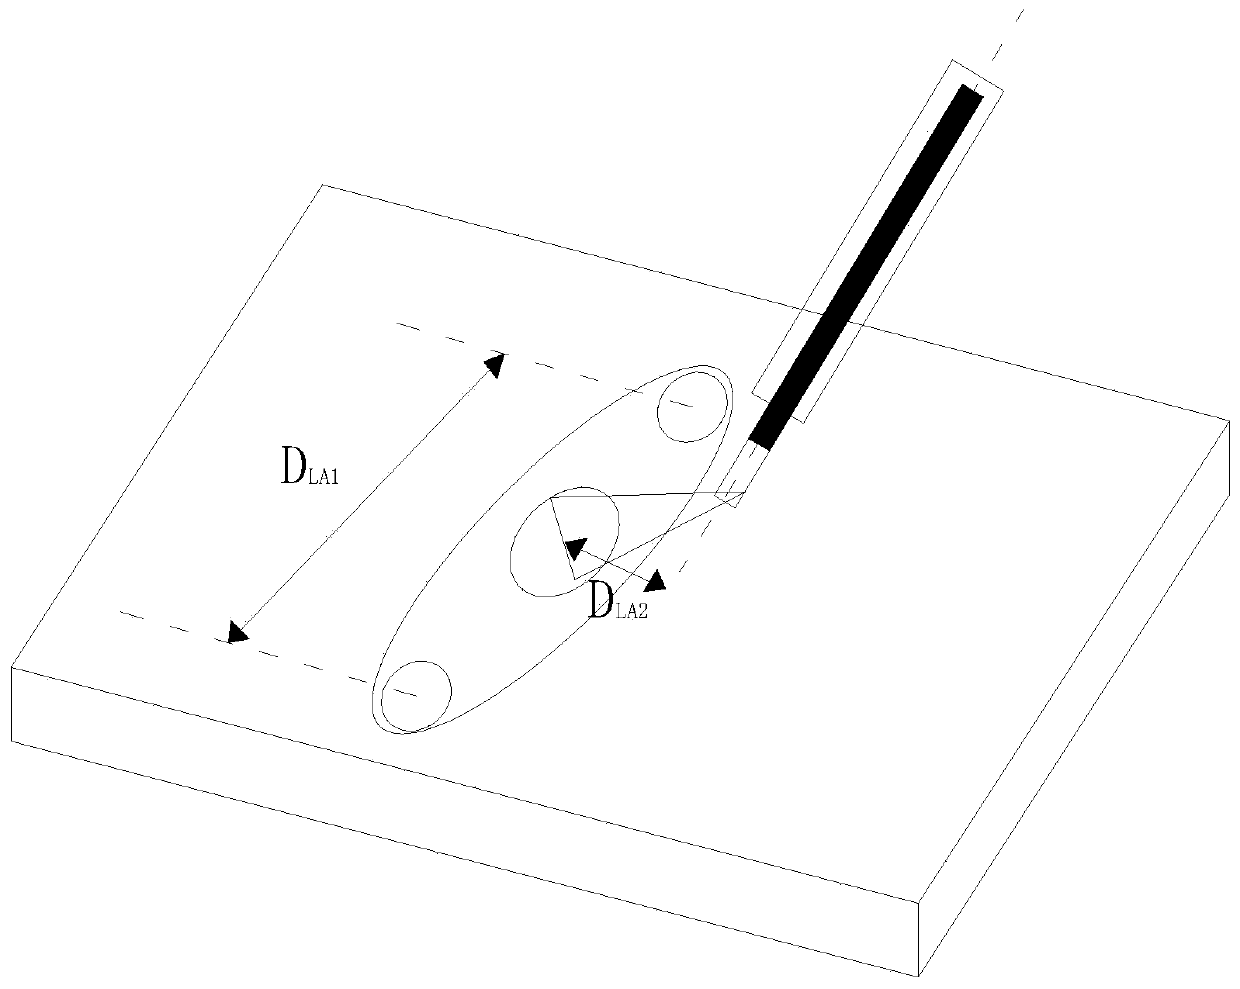 Two-pulse-laser-beam time sharing inducing MAG arc directional swing surfacing method